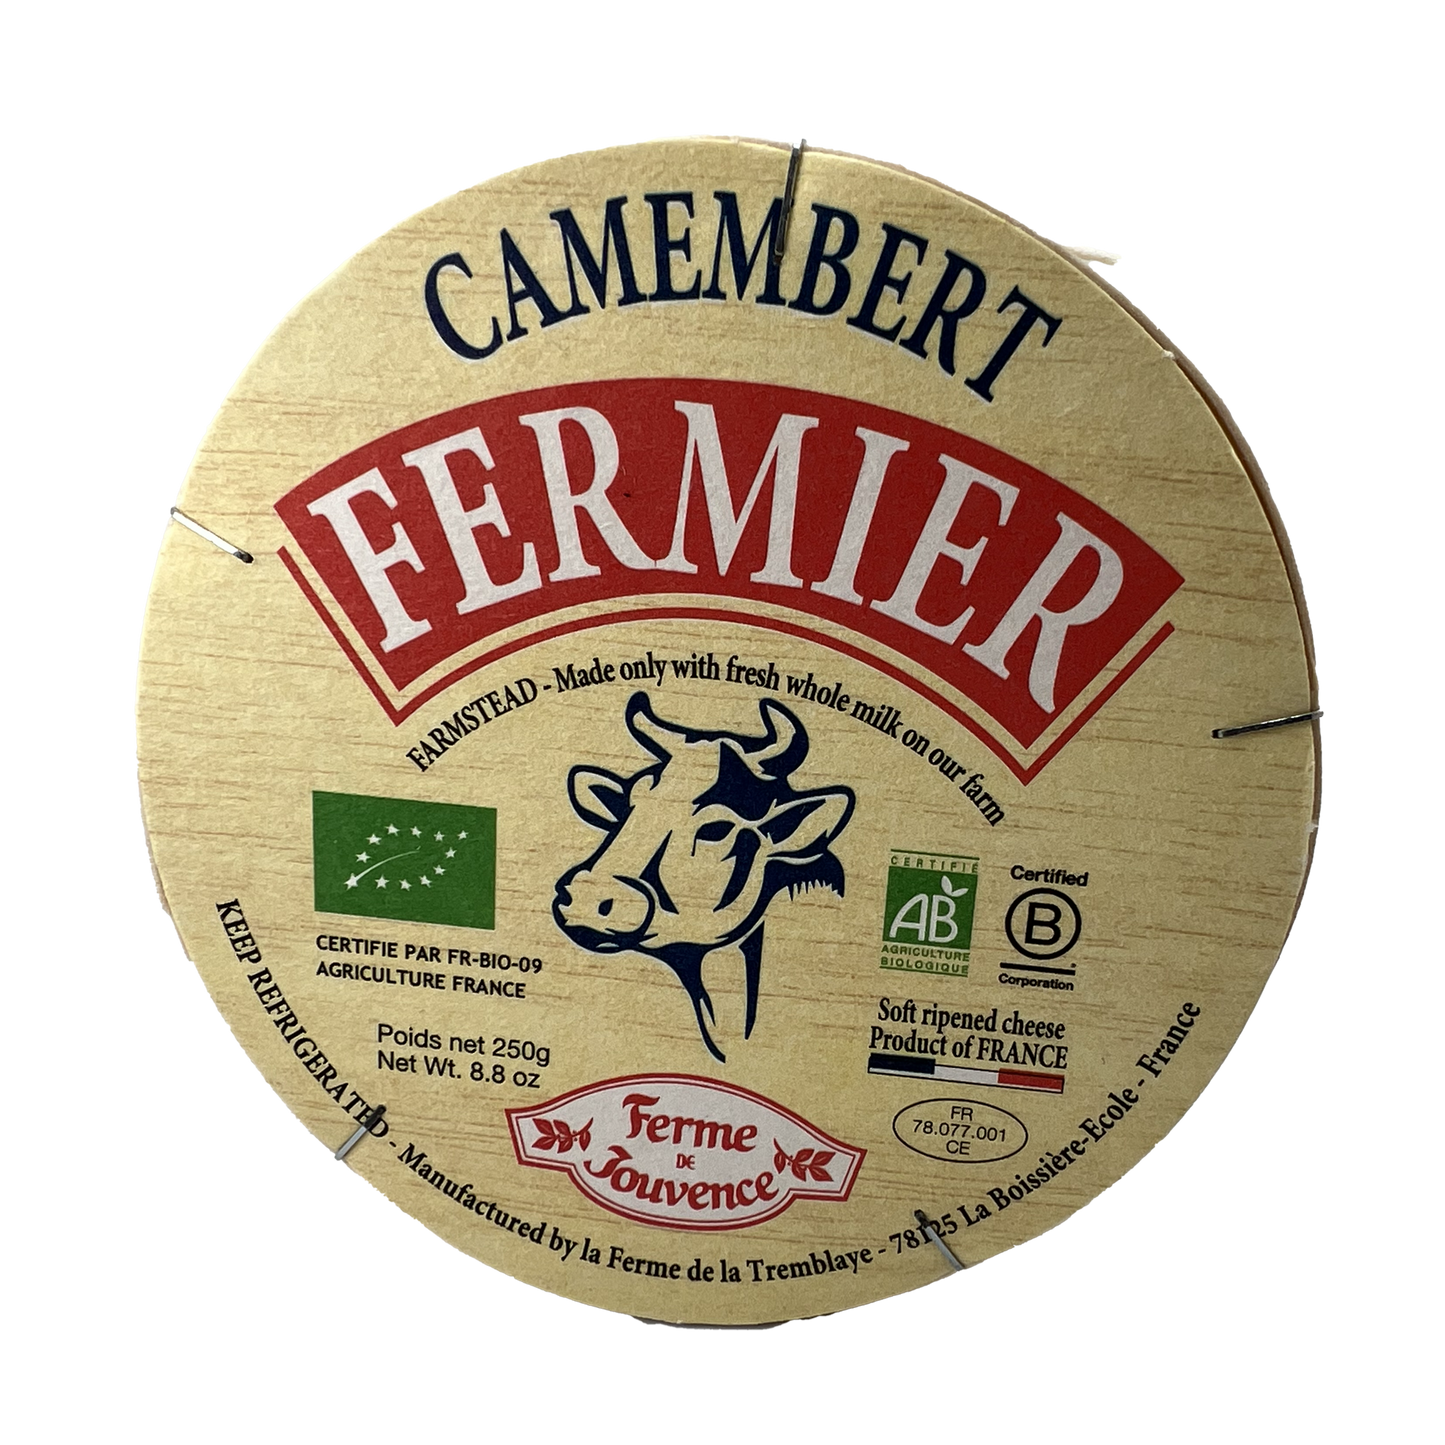 Camembert, Fermier